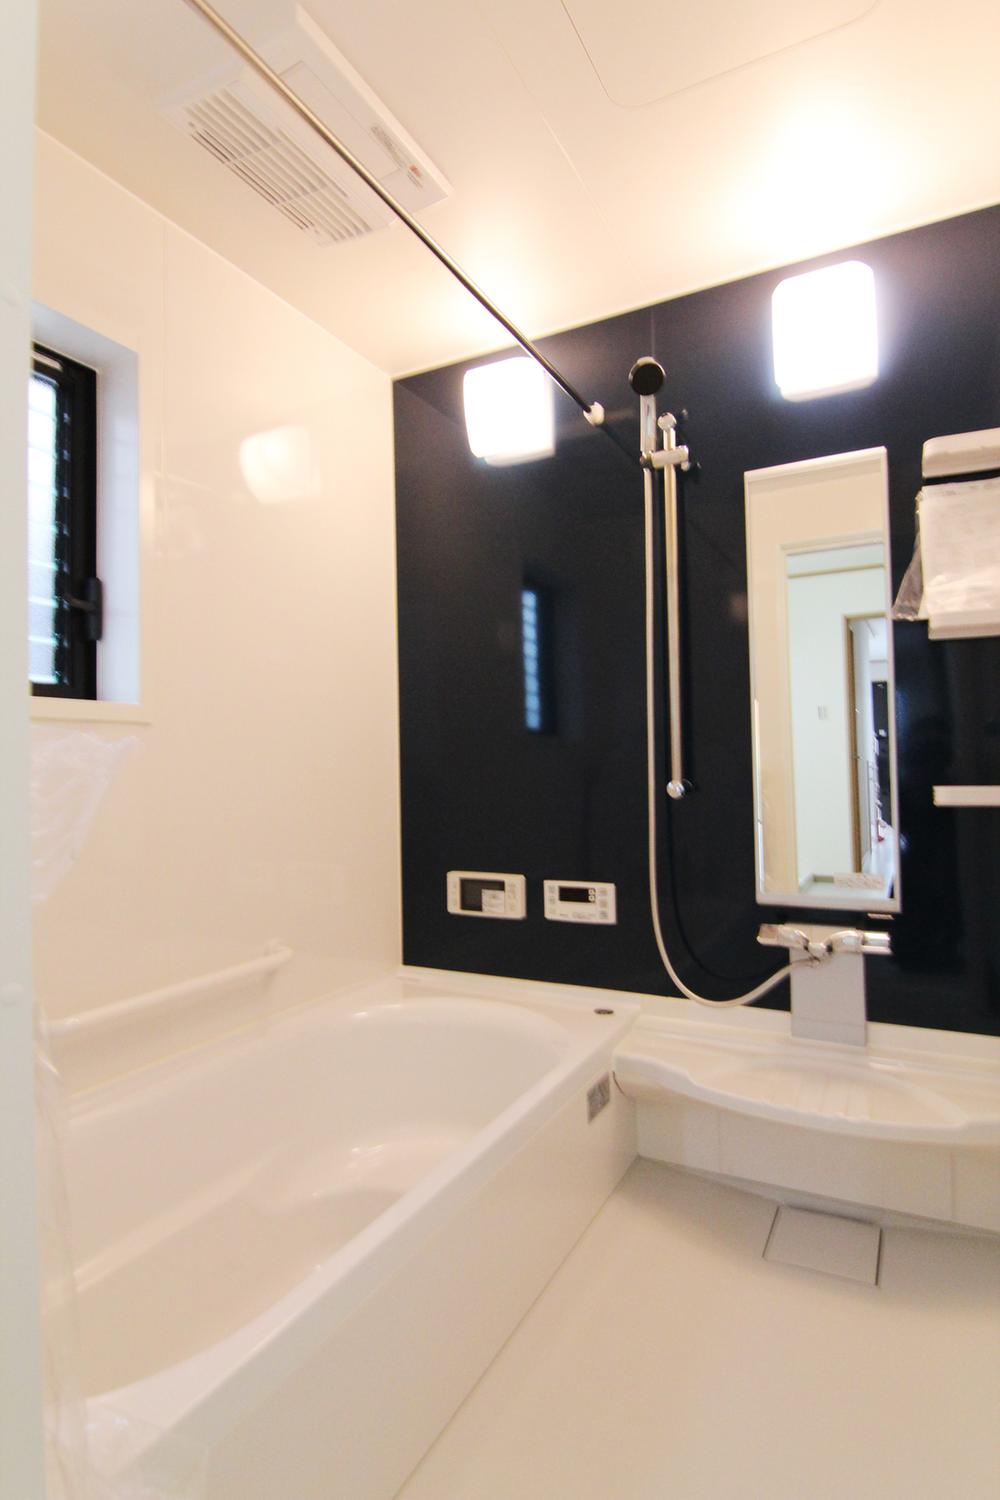 Same specifications photo (bathroom). Bathroom same specifications